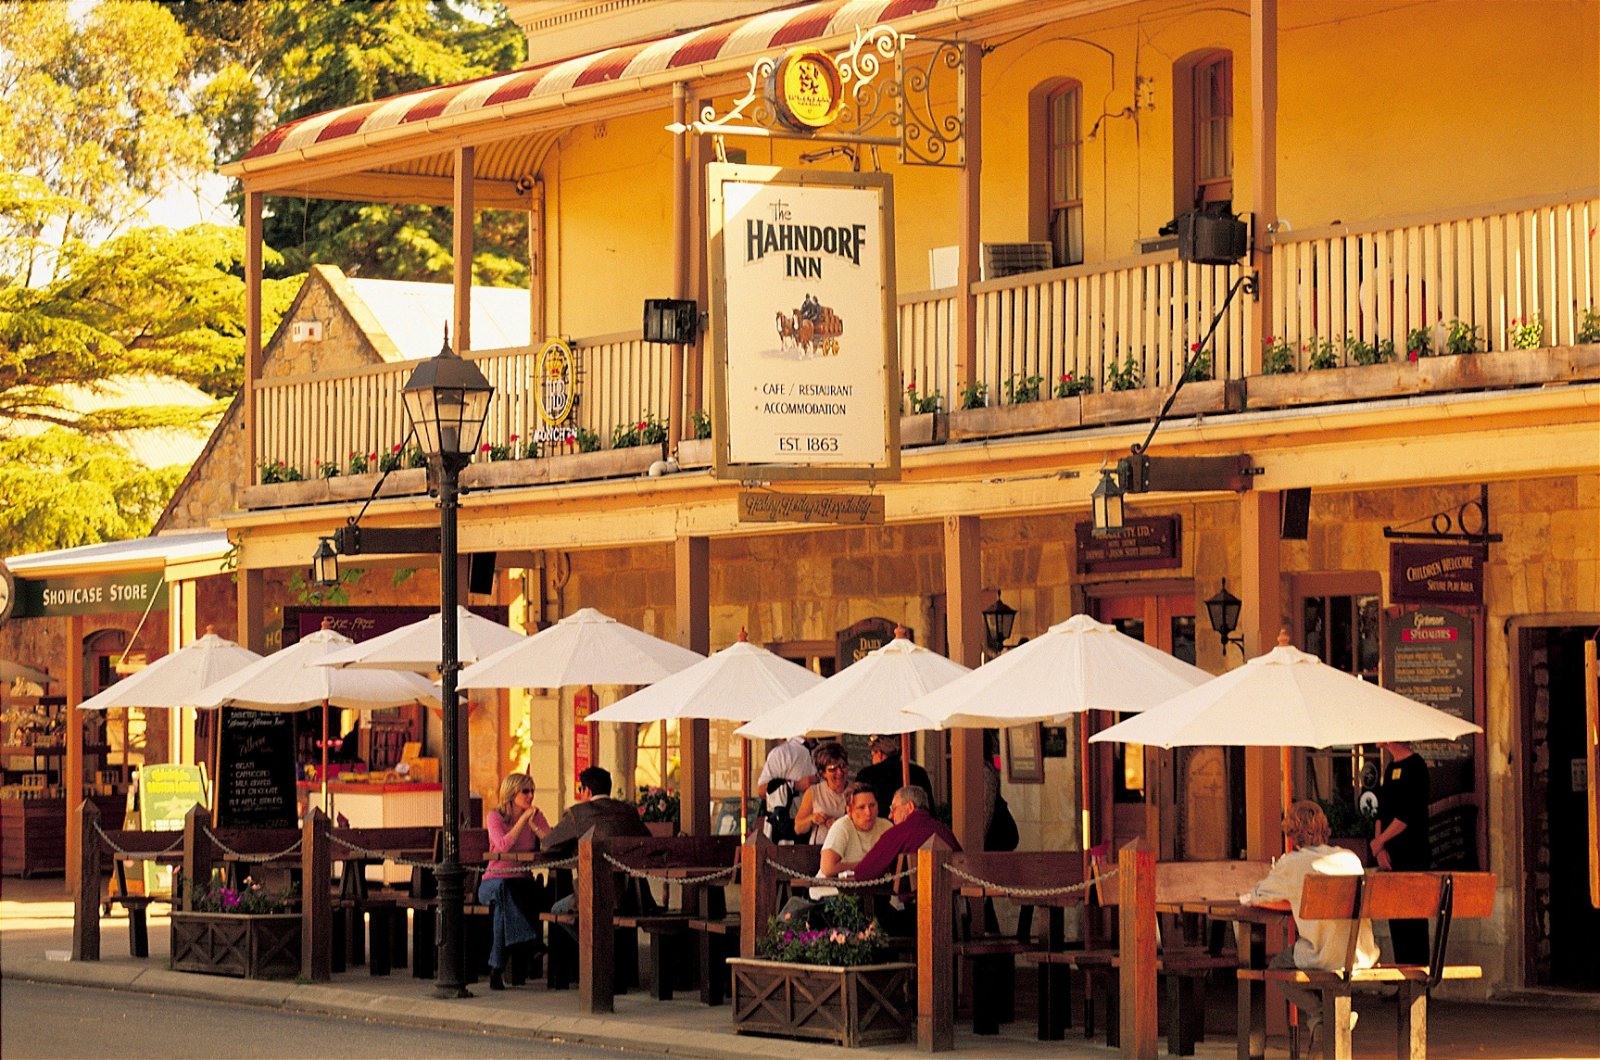 Hahndorf Inn Restaurant - Broome Tourism